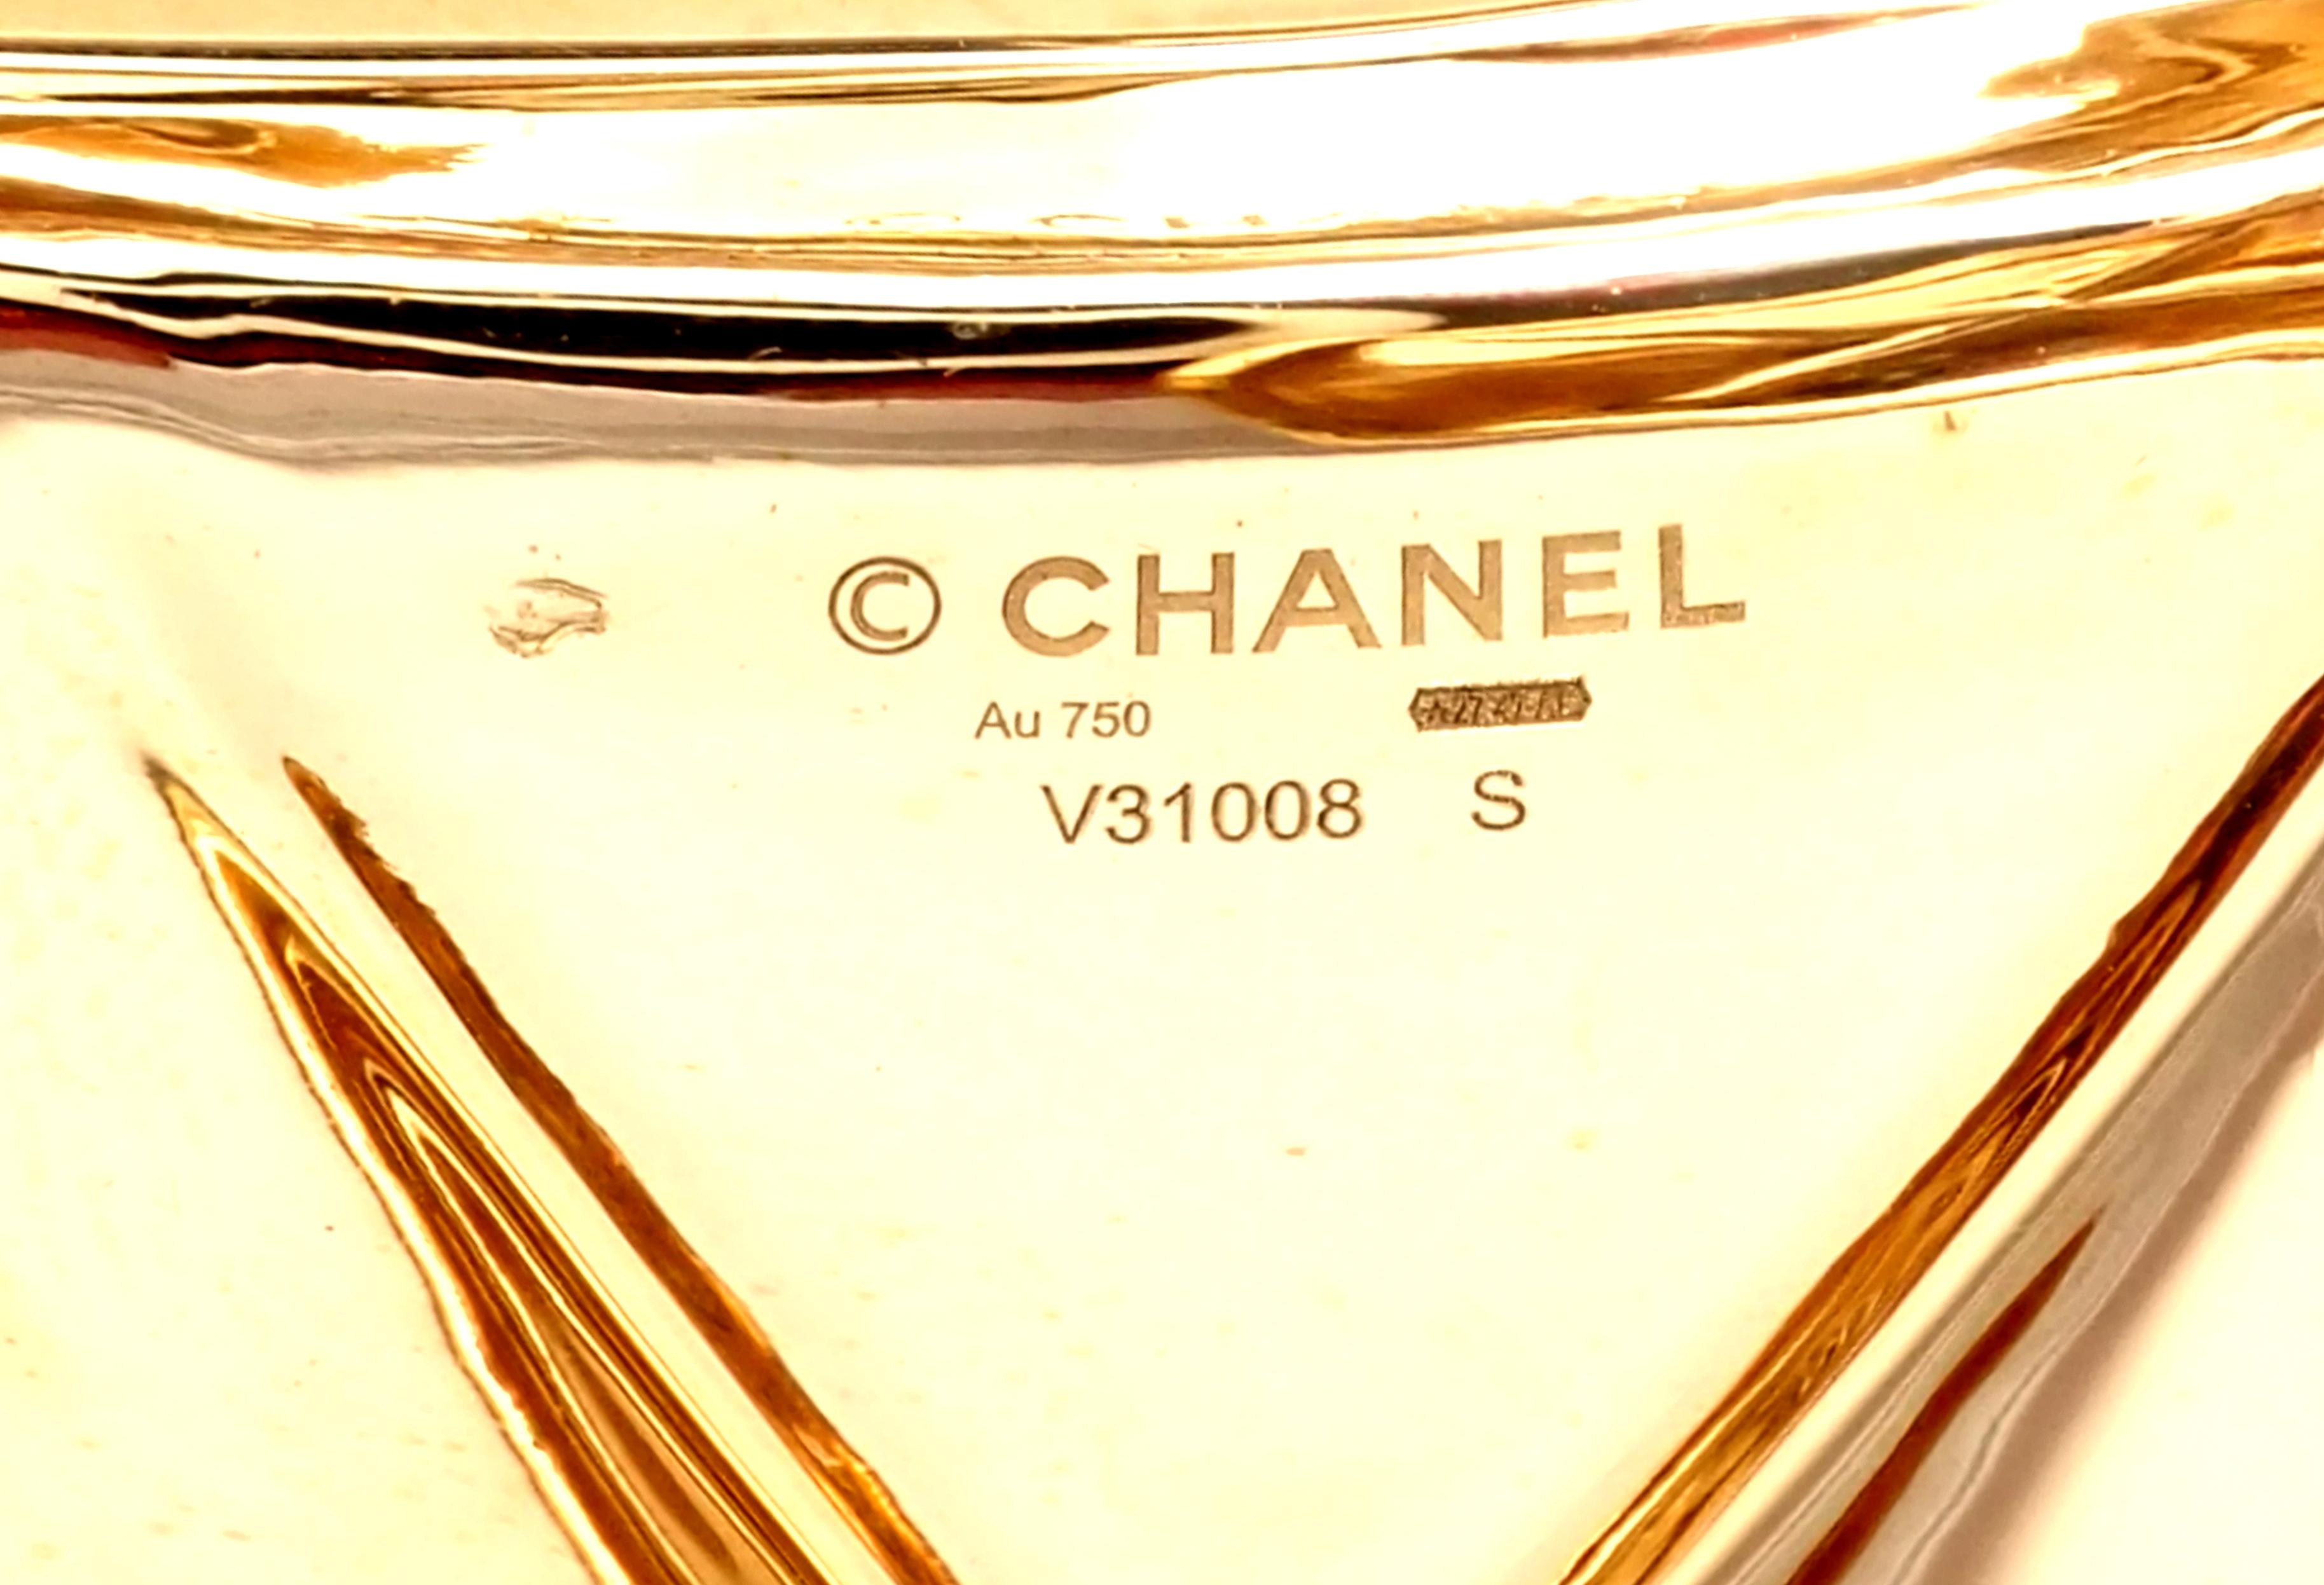 Chanel Coco Crush Yellow Gold Cuff Bangle Bracelet 2